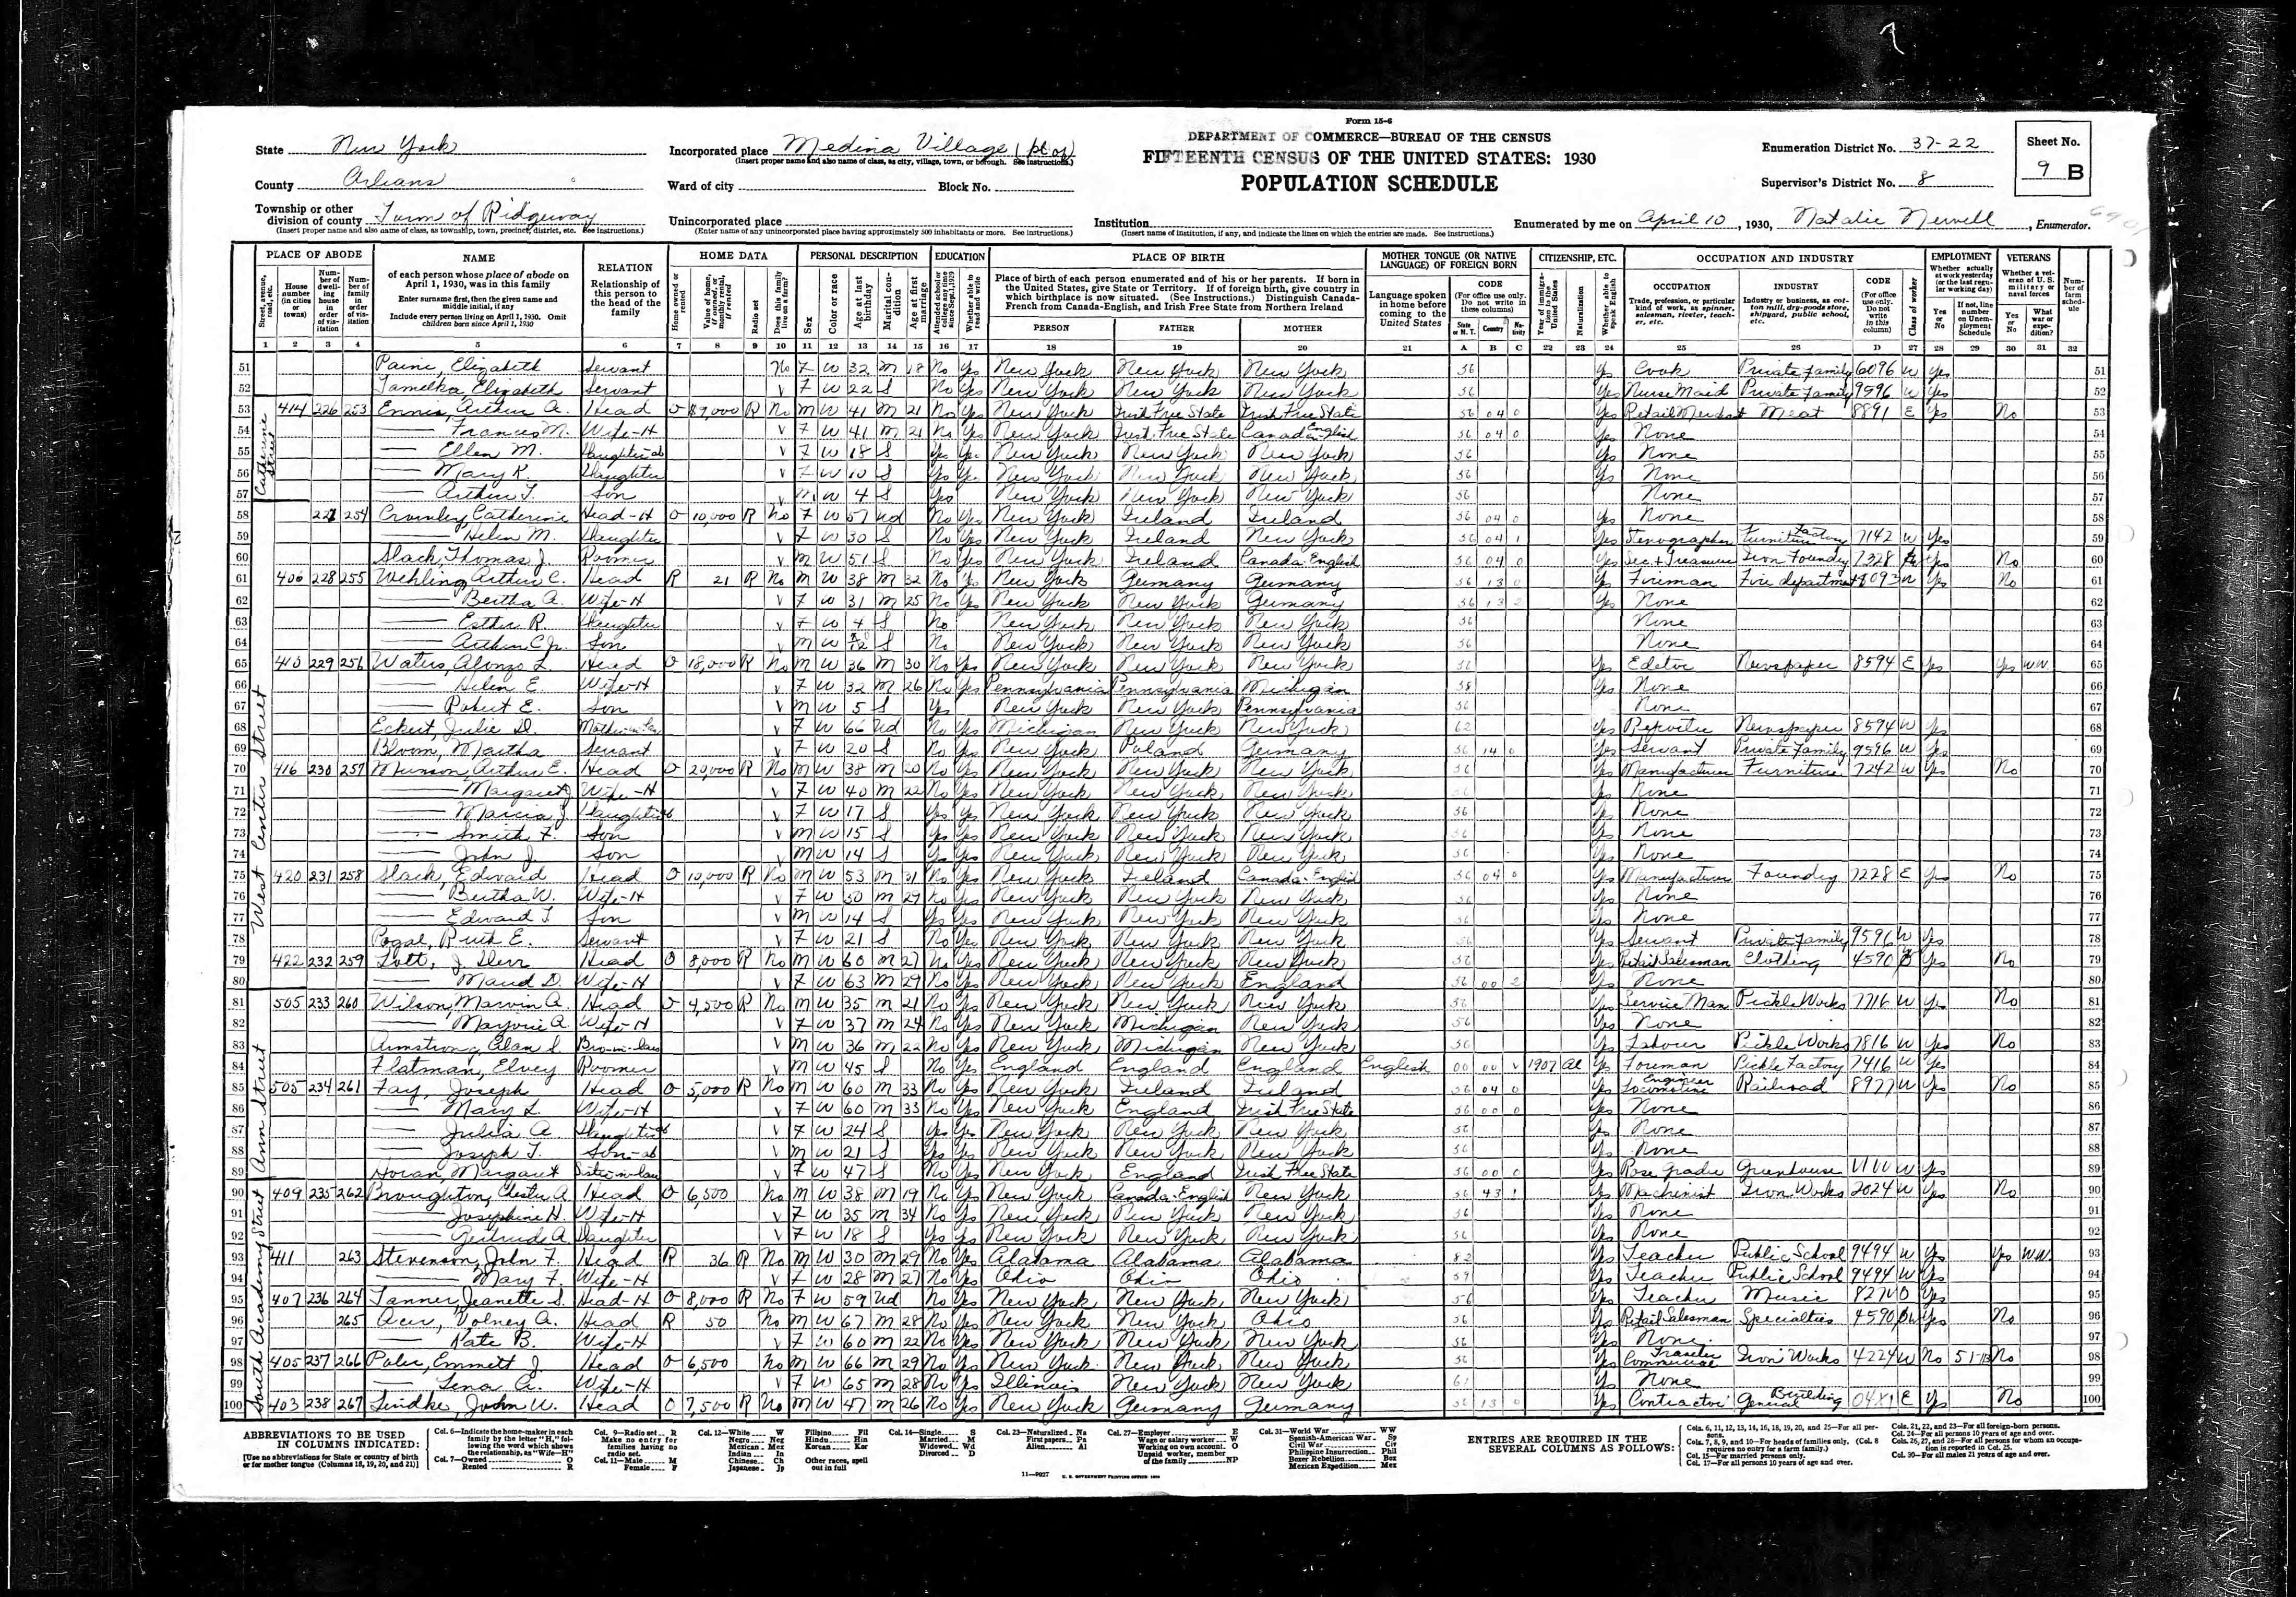 1930 US Census, John Munson, line 74